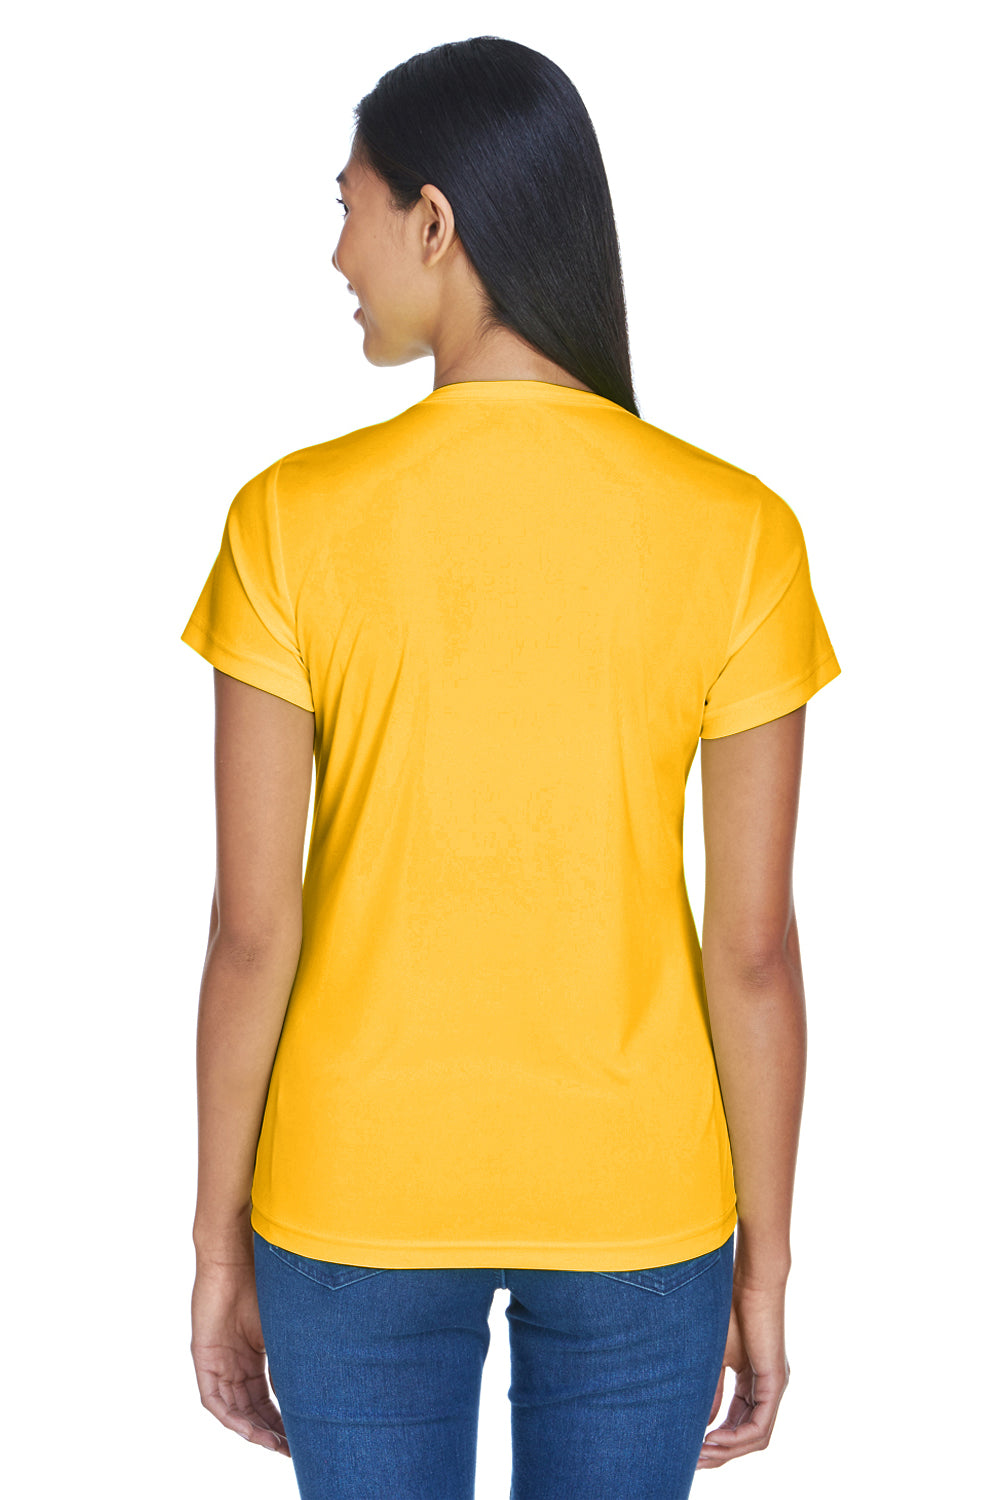 UltraClub 8420L Womens Cool & Dry Performance Moisture Wicking Short Sleeve Crewneck T-Shirt Gold Back